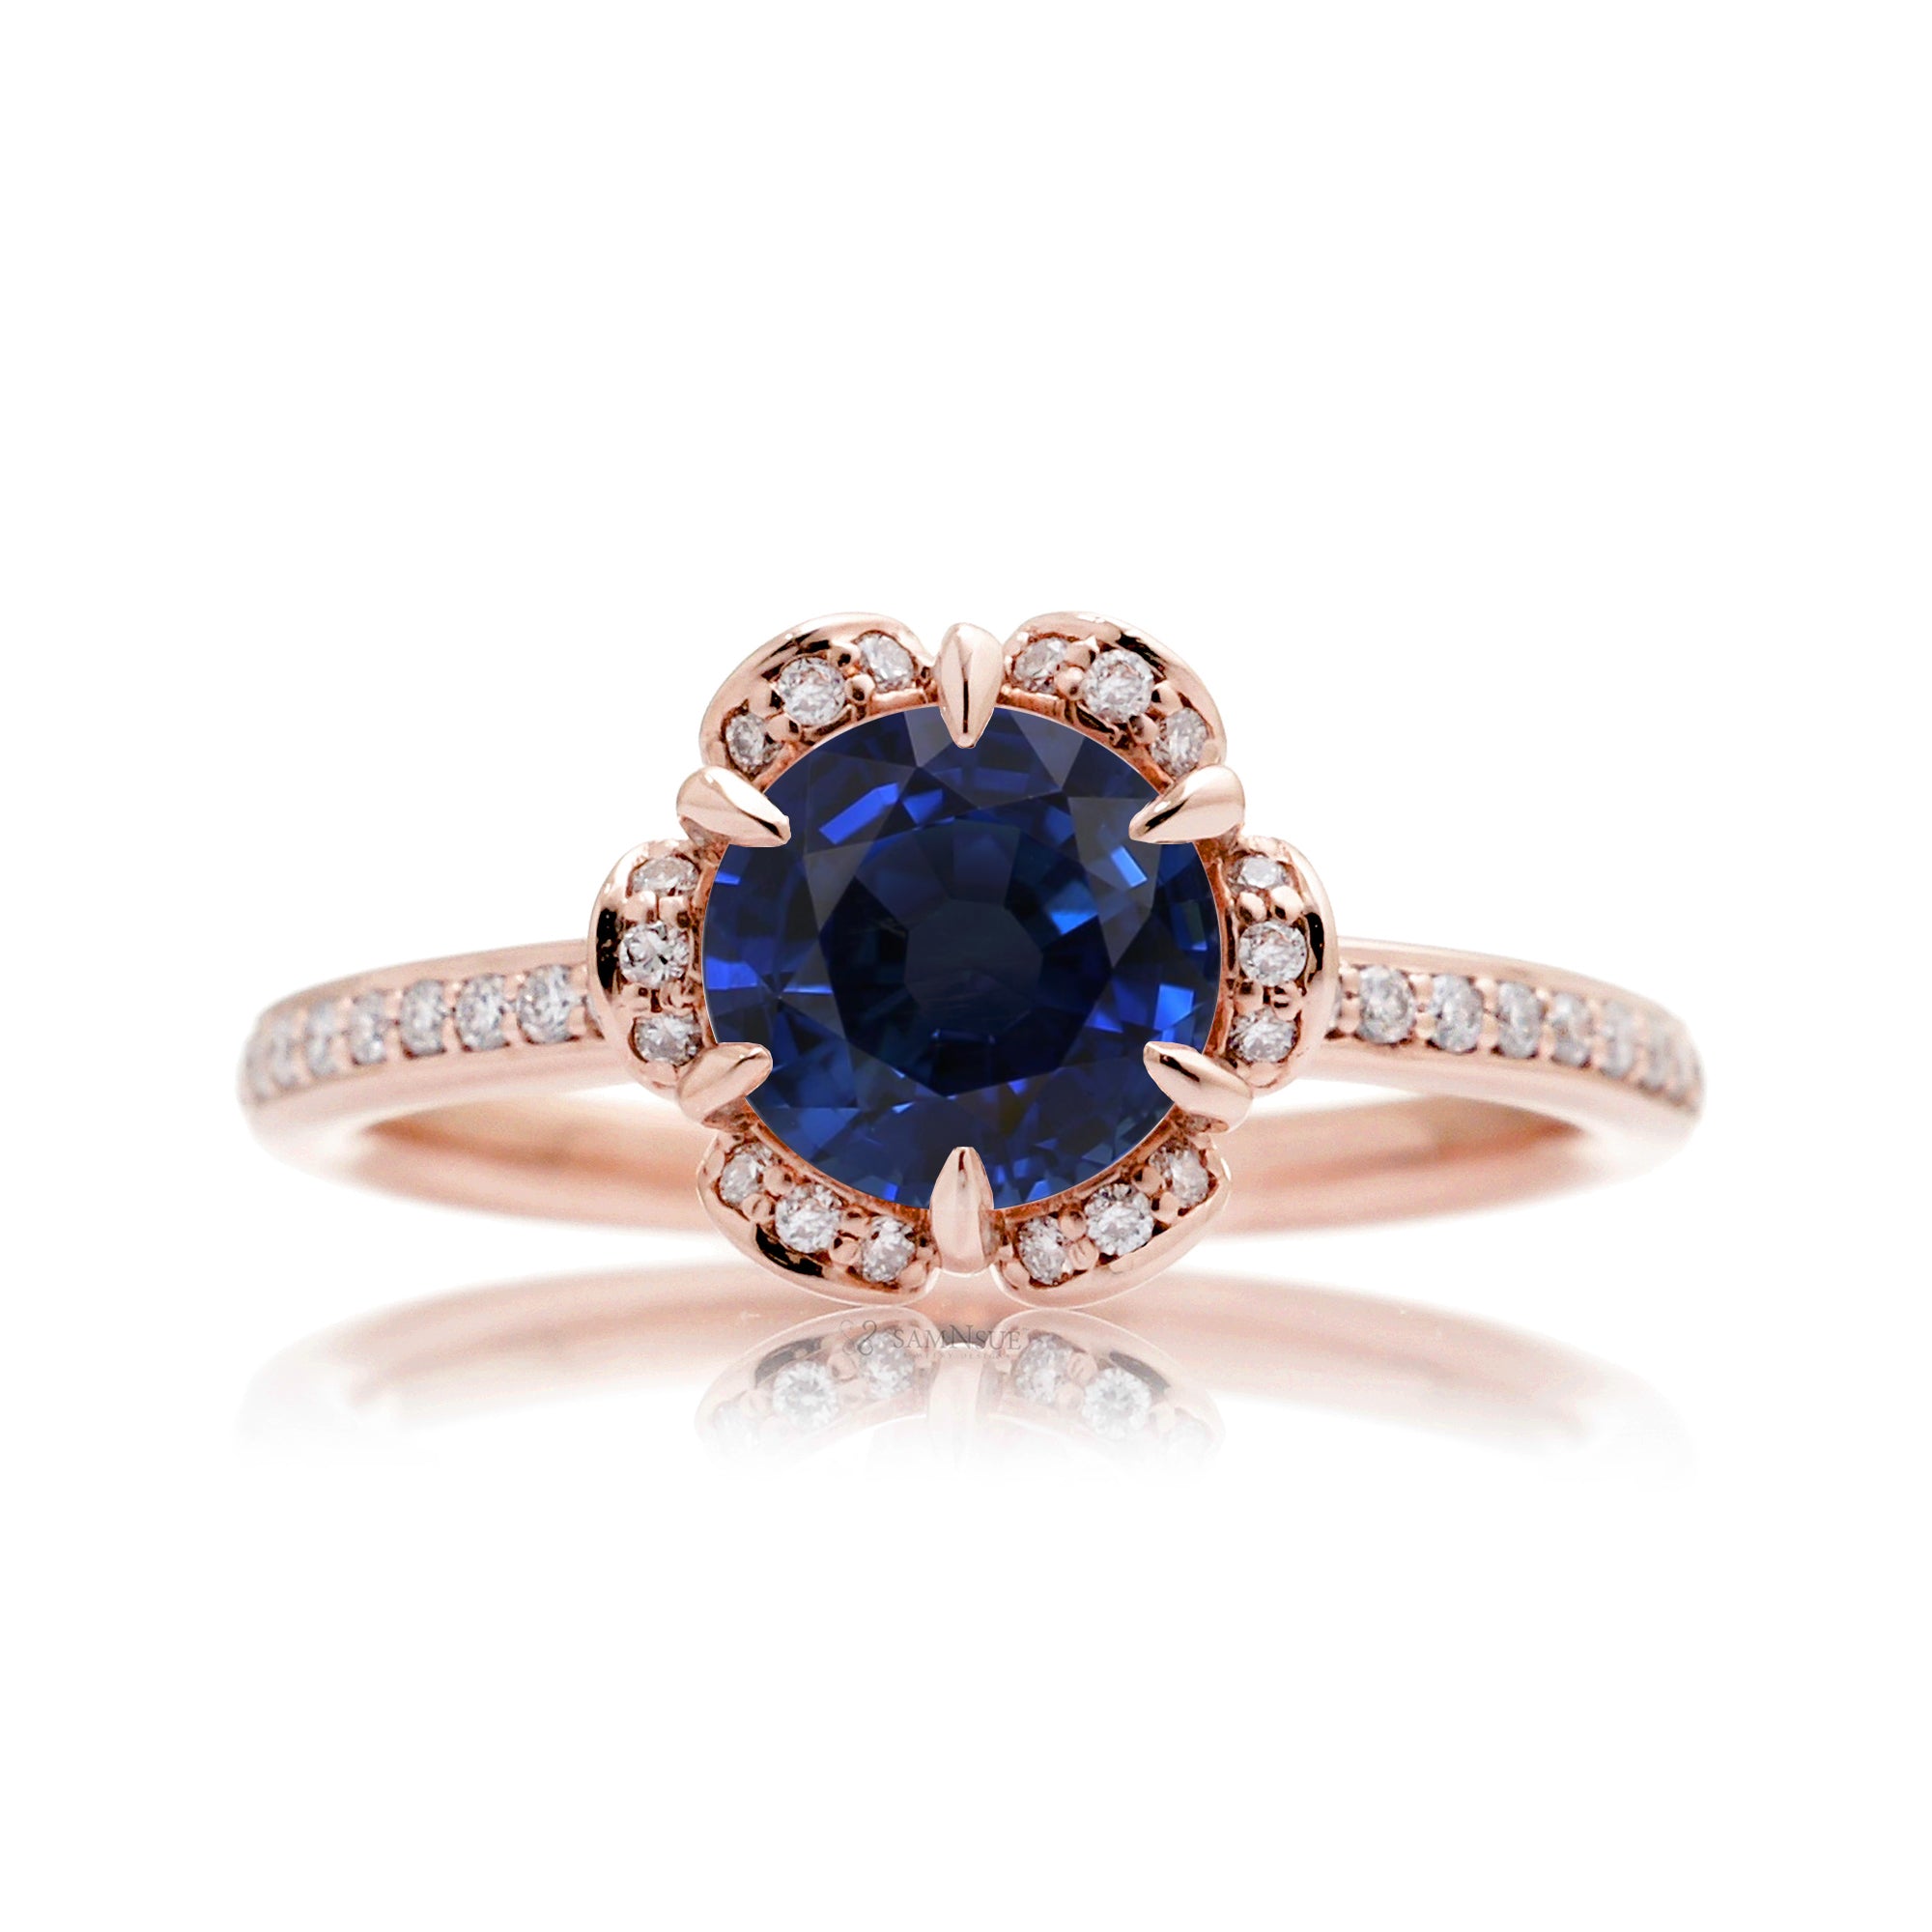 Sapphire ring diamond flower basket engagement ring rose gold